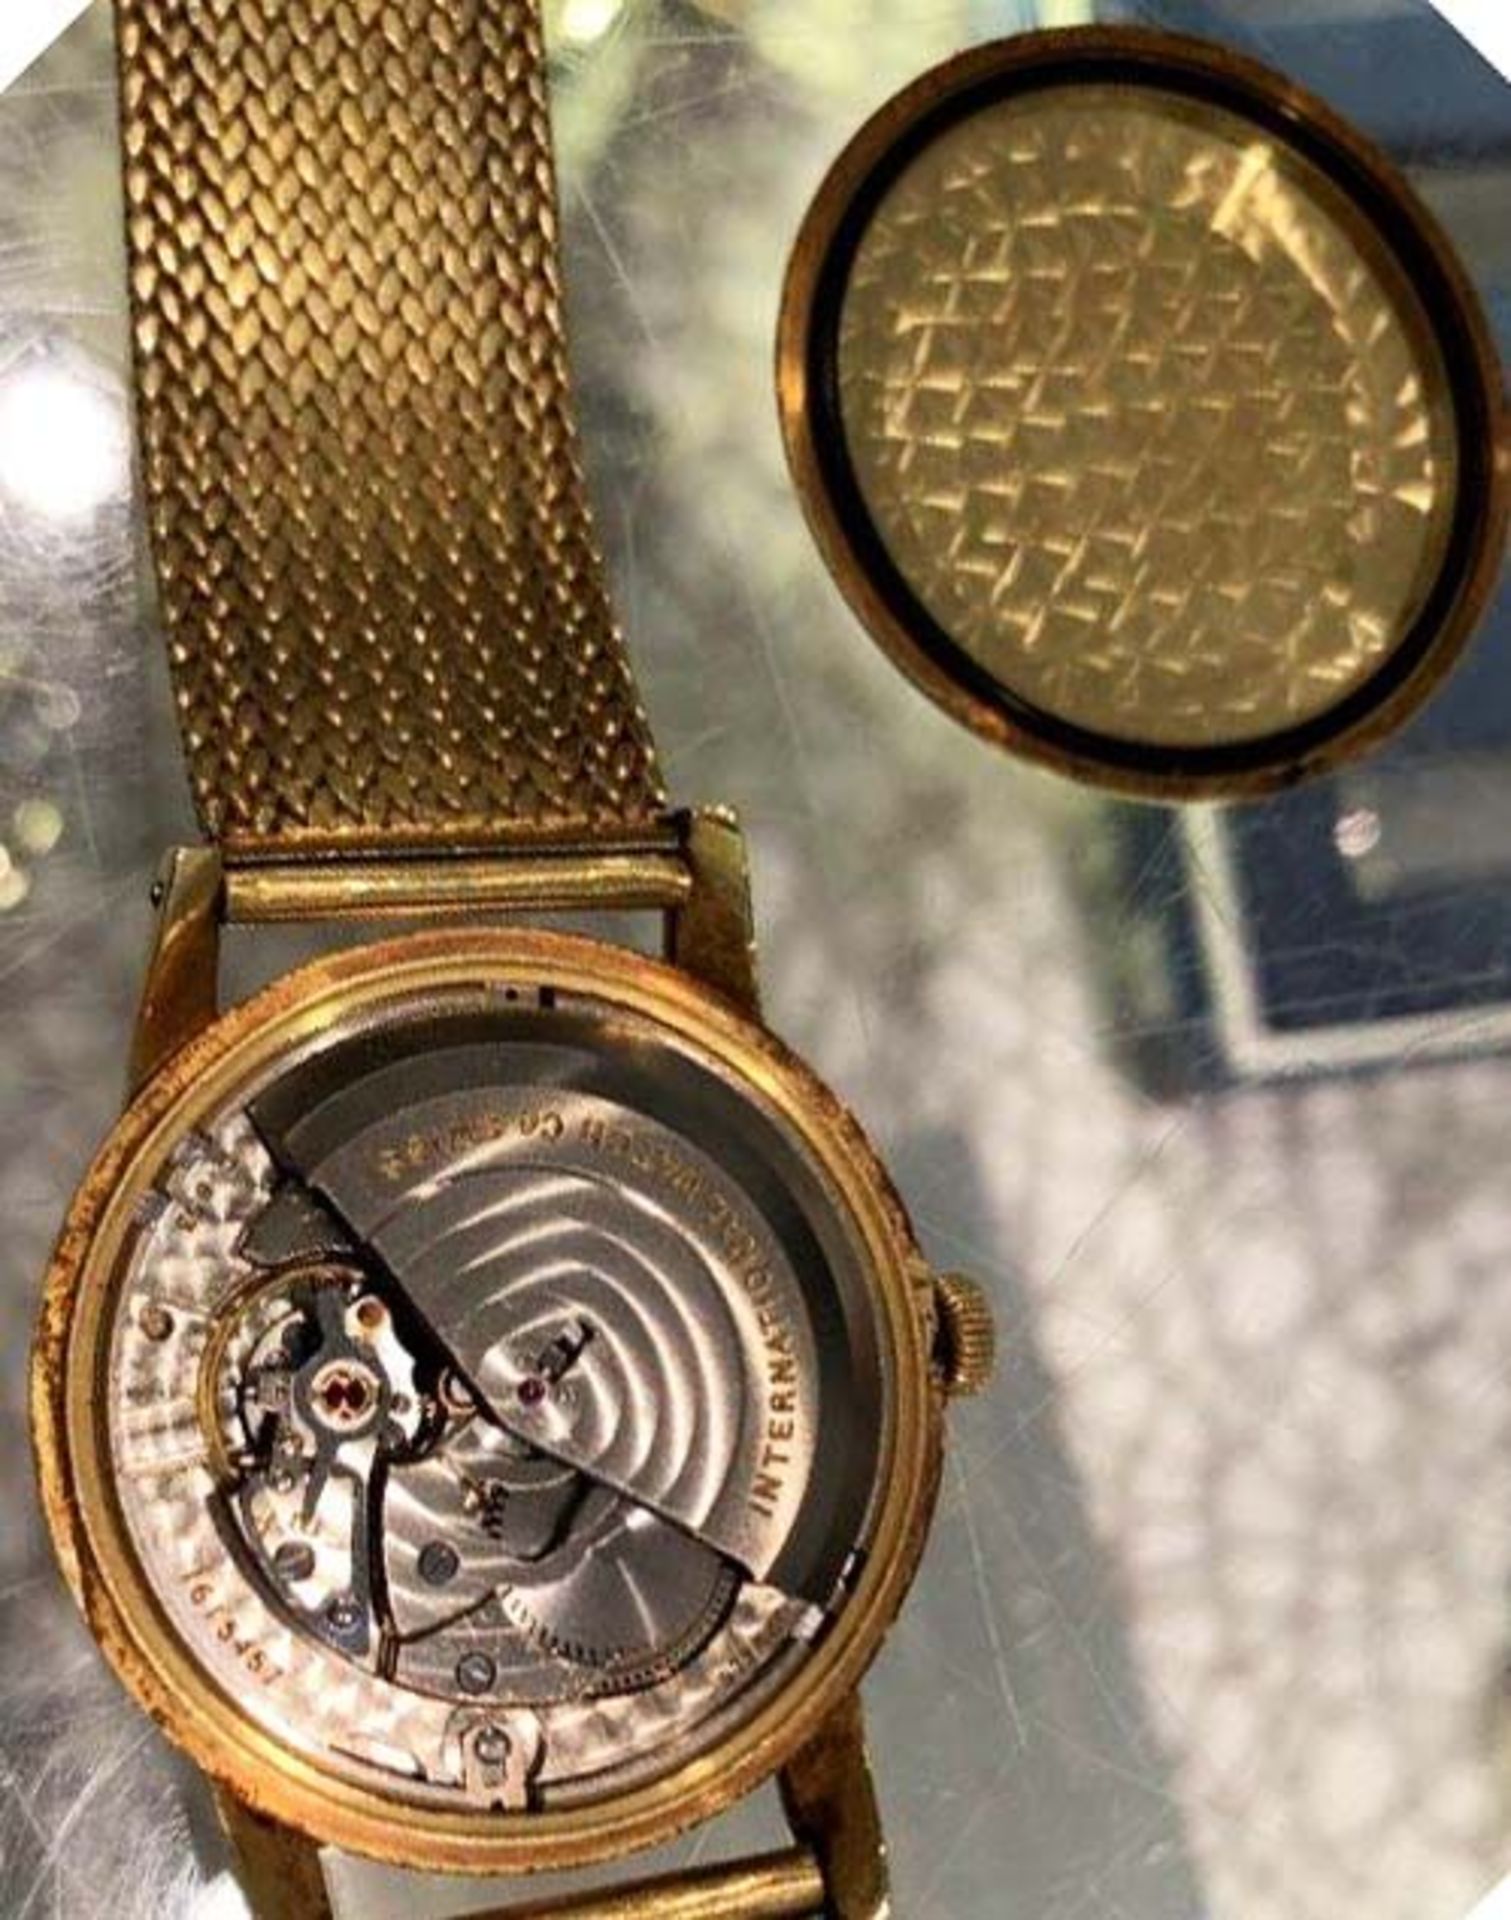 IWC (International Watch Company) Herrenarmbanduhr, 750er GG, Automatic, Gebrauchsspuren, L. 21 - Image 4 of 5